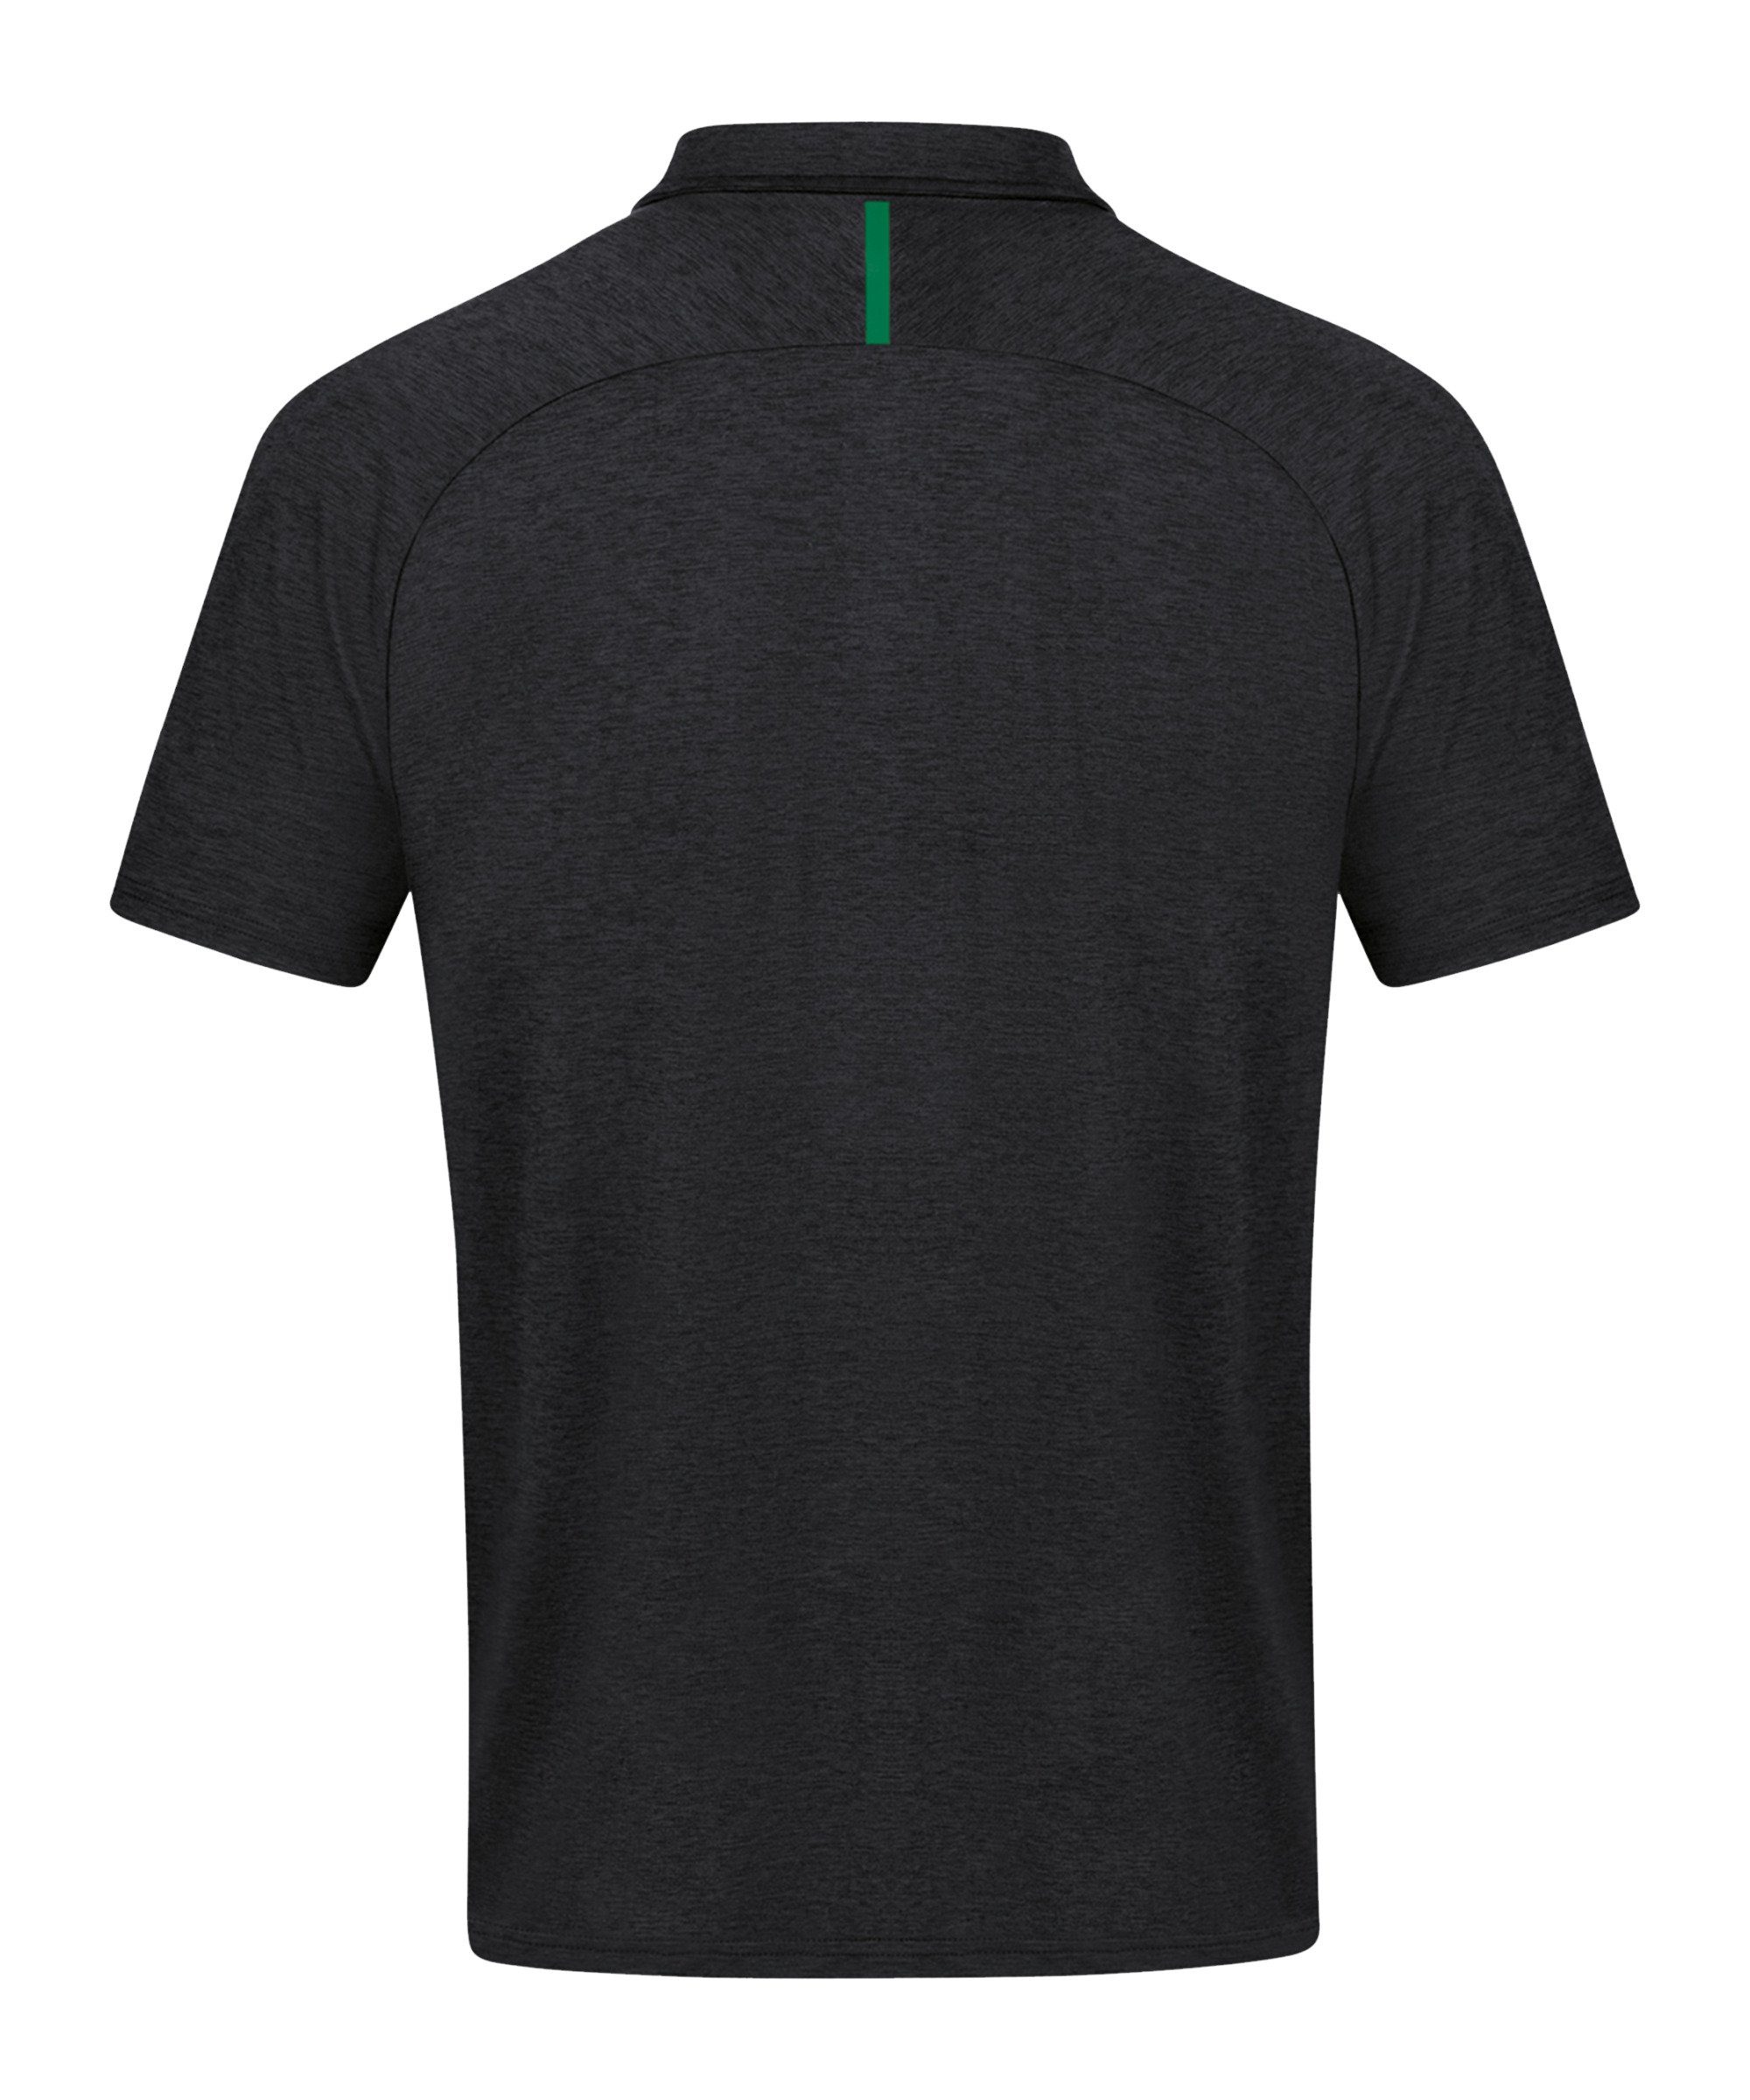 Challenge T-Shirt schwarzgruen default Polo Jako